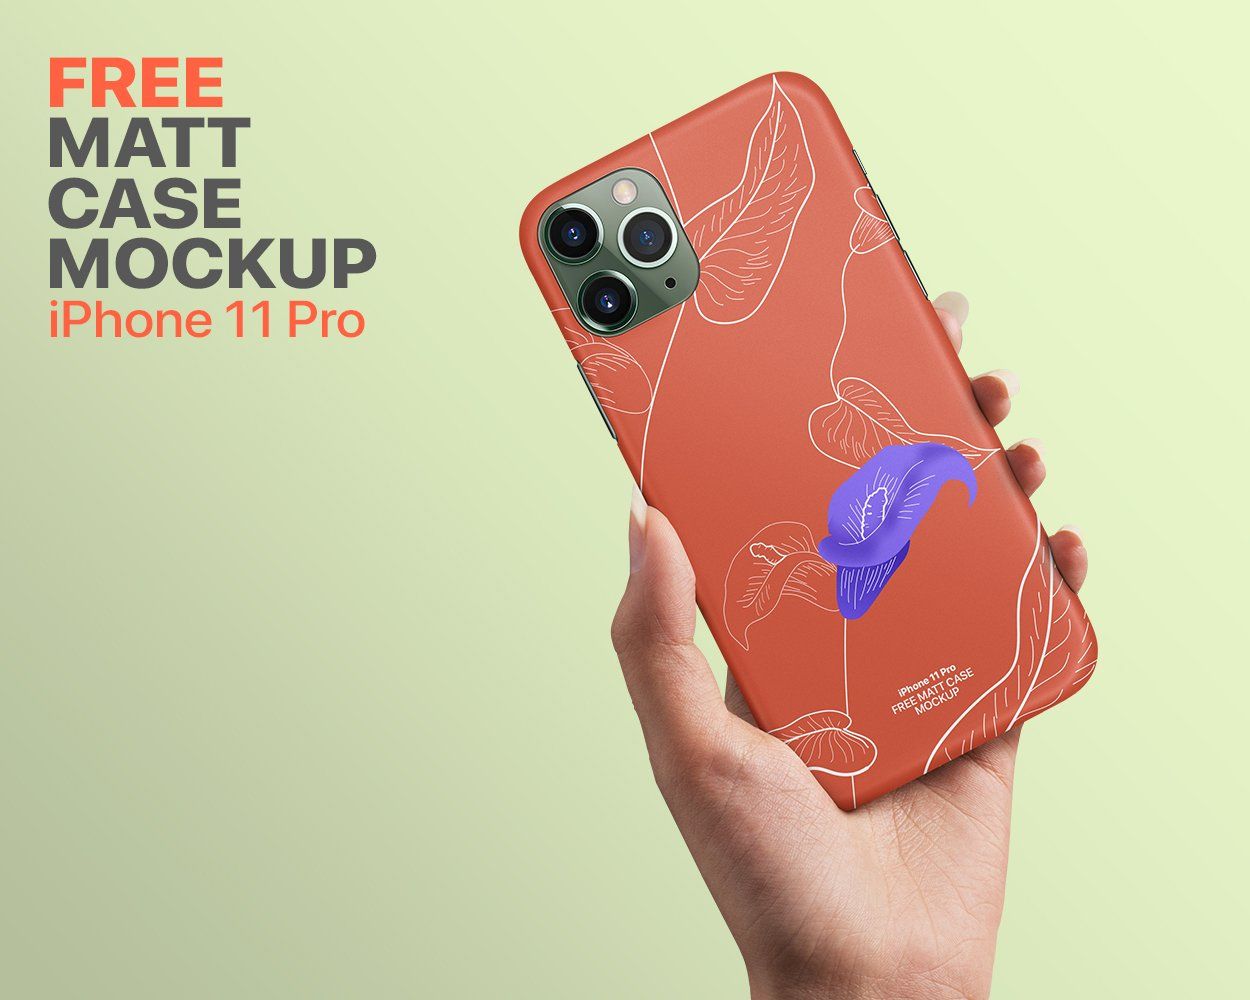 Free iPhone 11 Pro Matt Case Mockup    